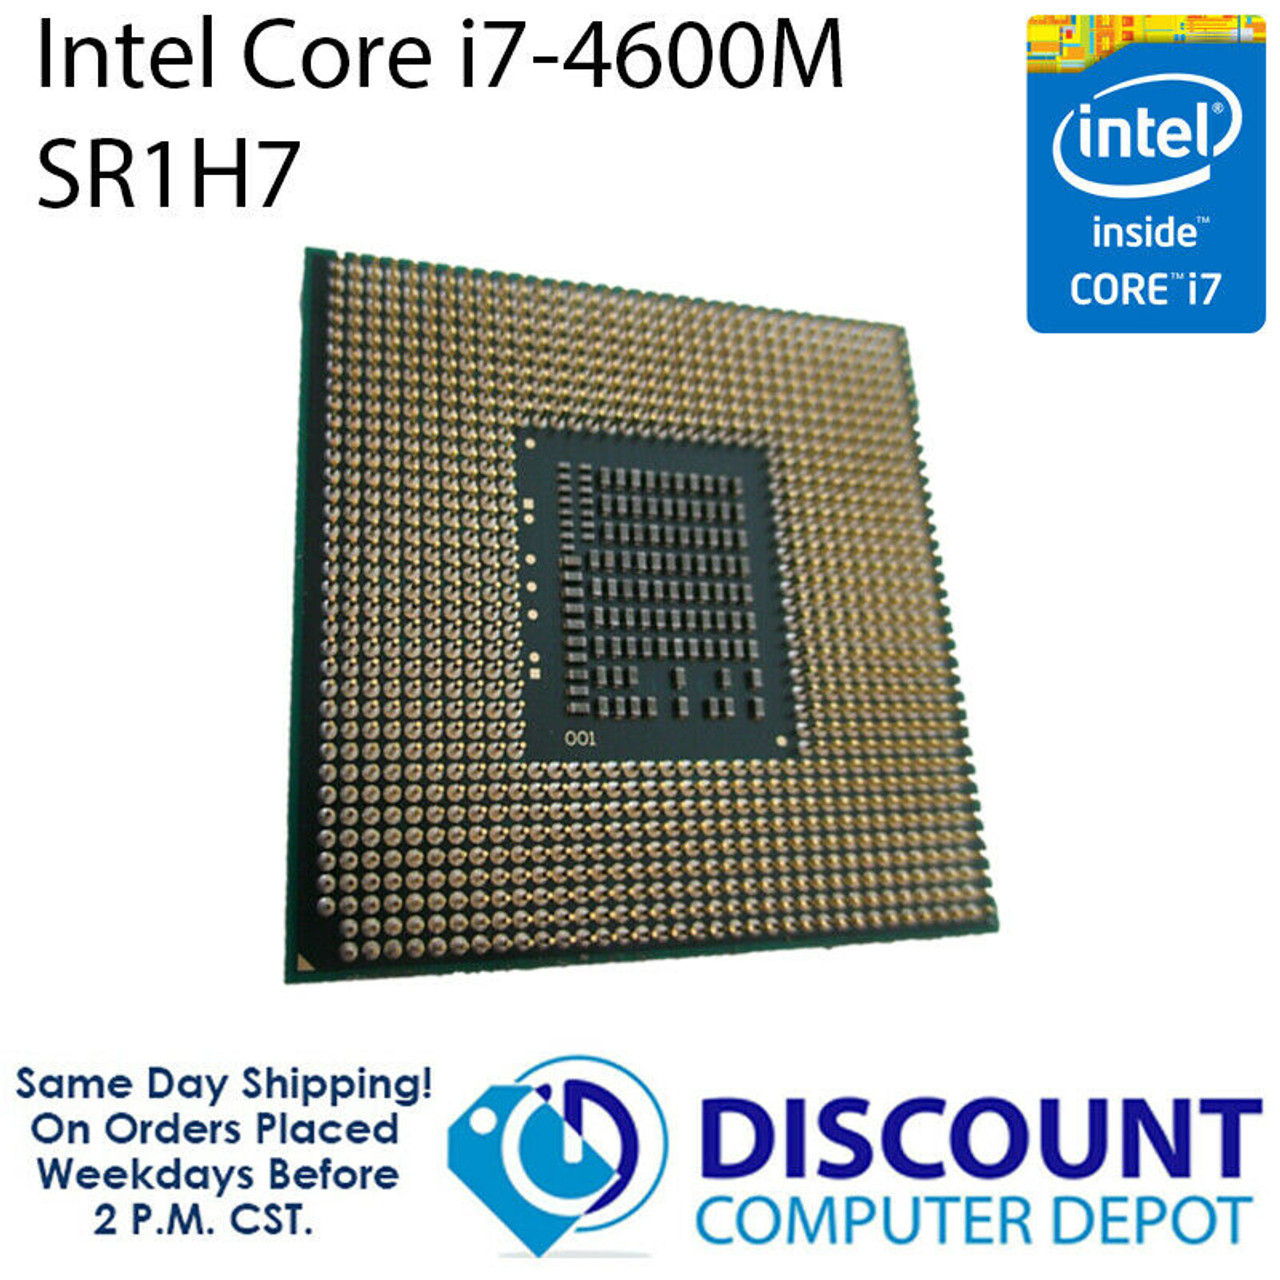 Intel Core i7-4600M 2.9 GHz SR1H7 Laptop CPU Processor PGA 946 G3 Socket